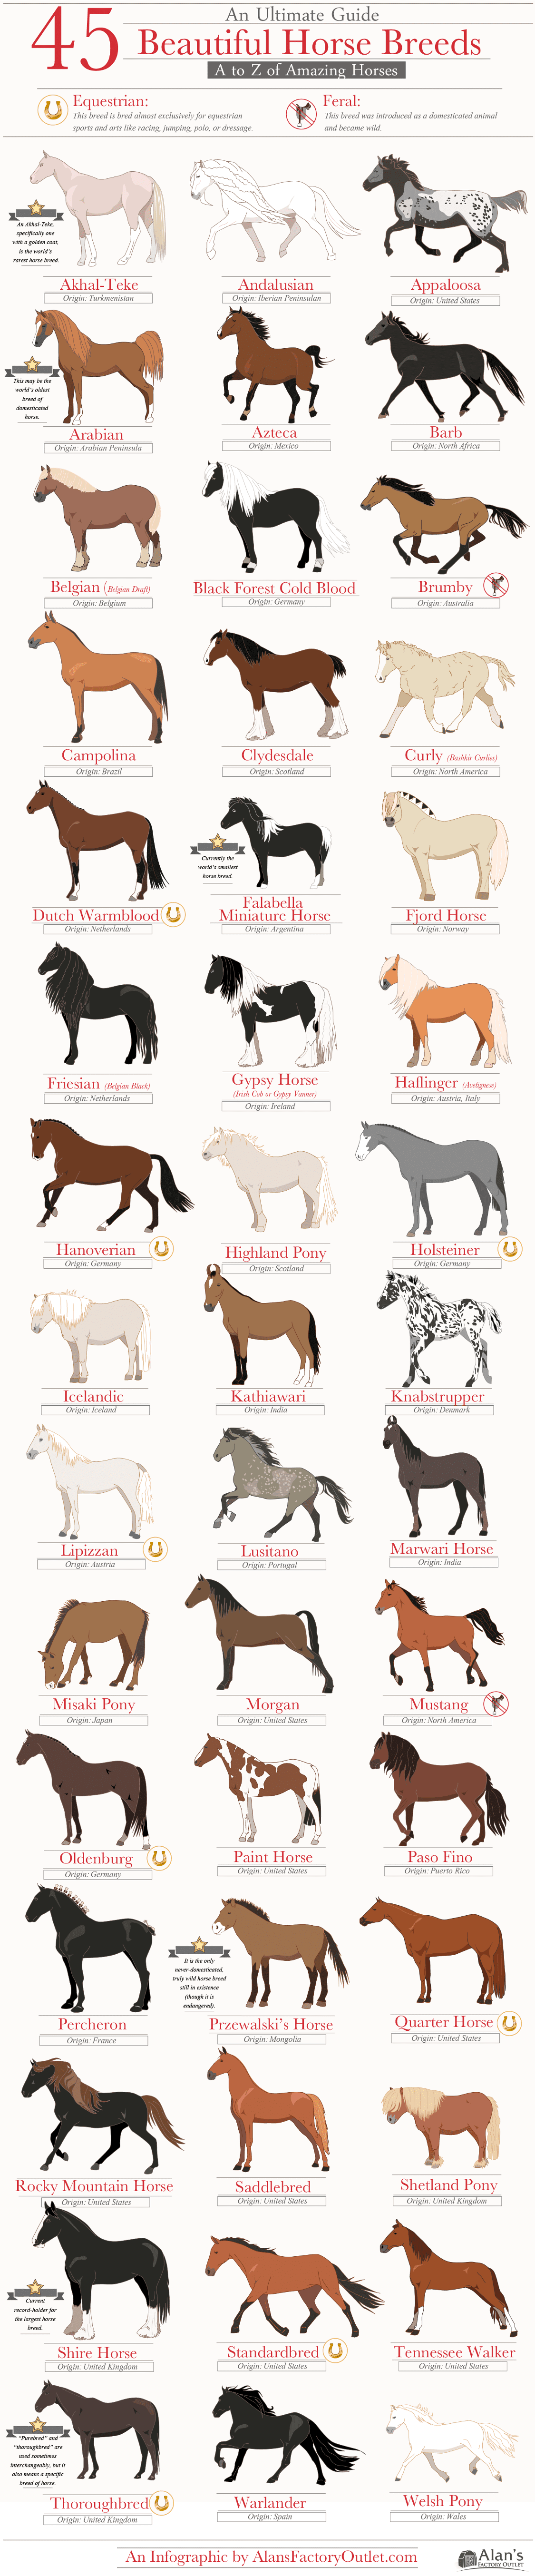 45-beautiful-horse-breeds-2b.png